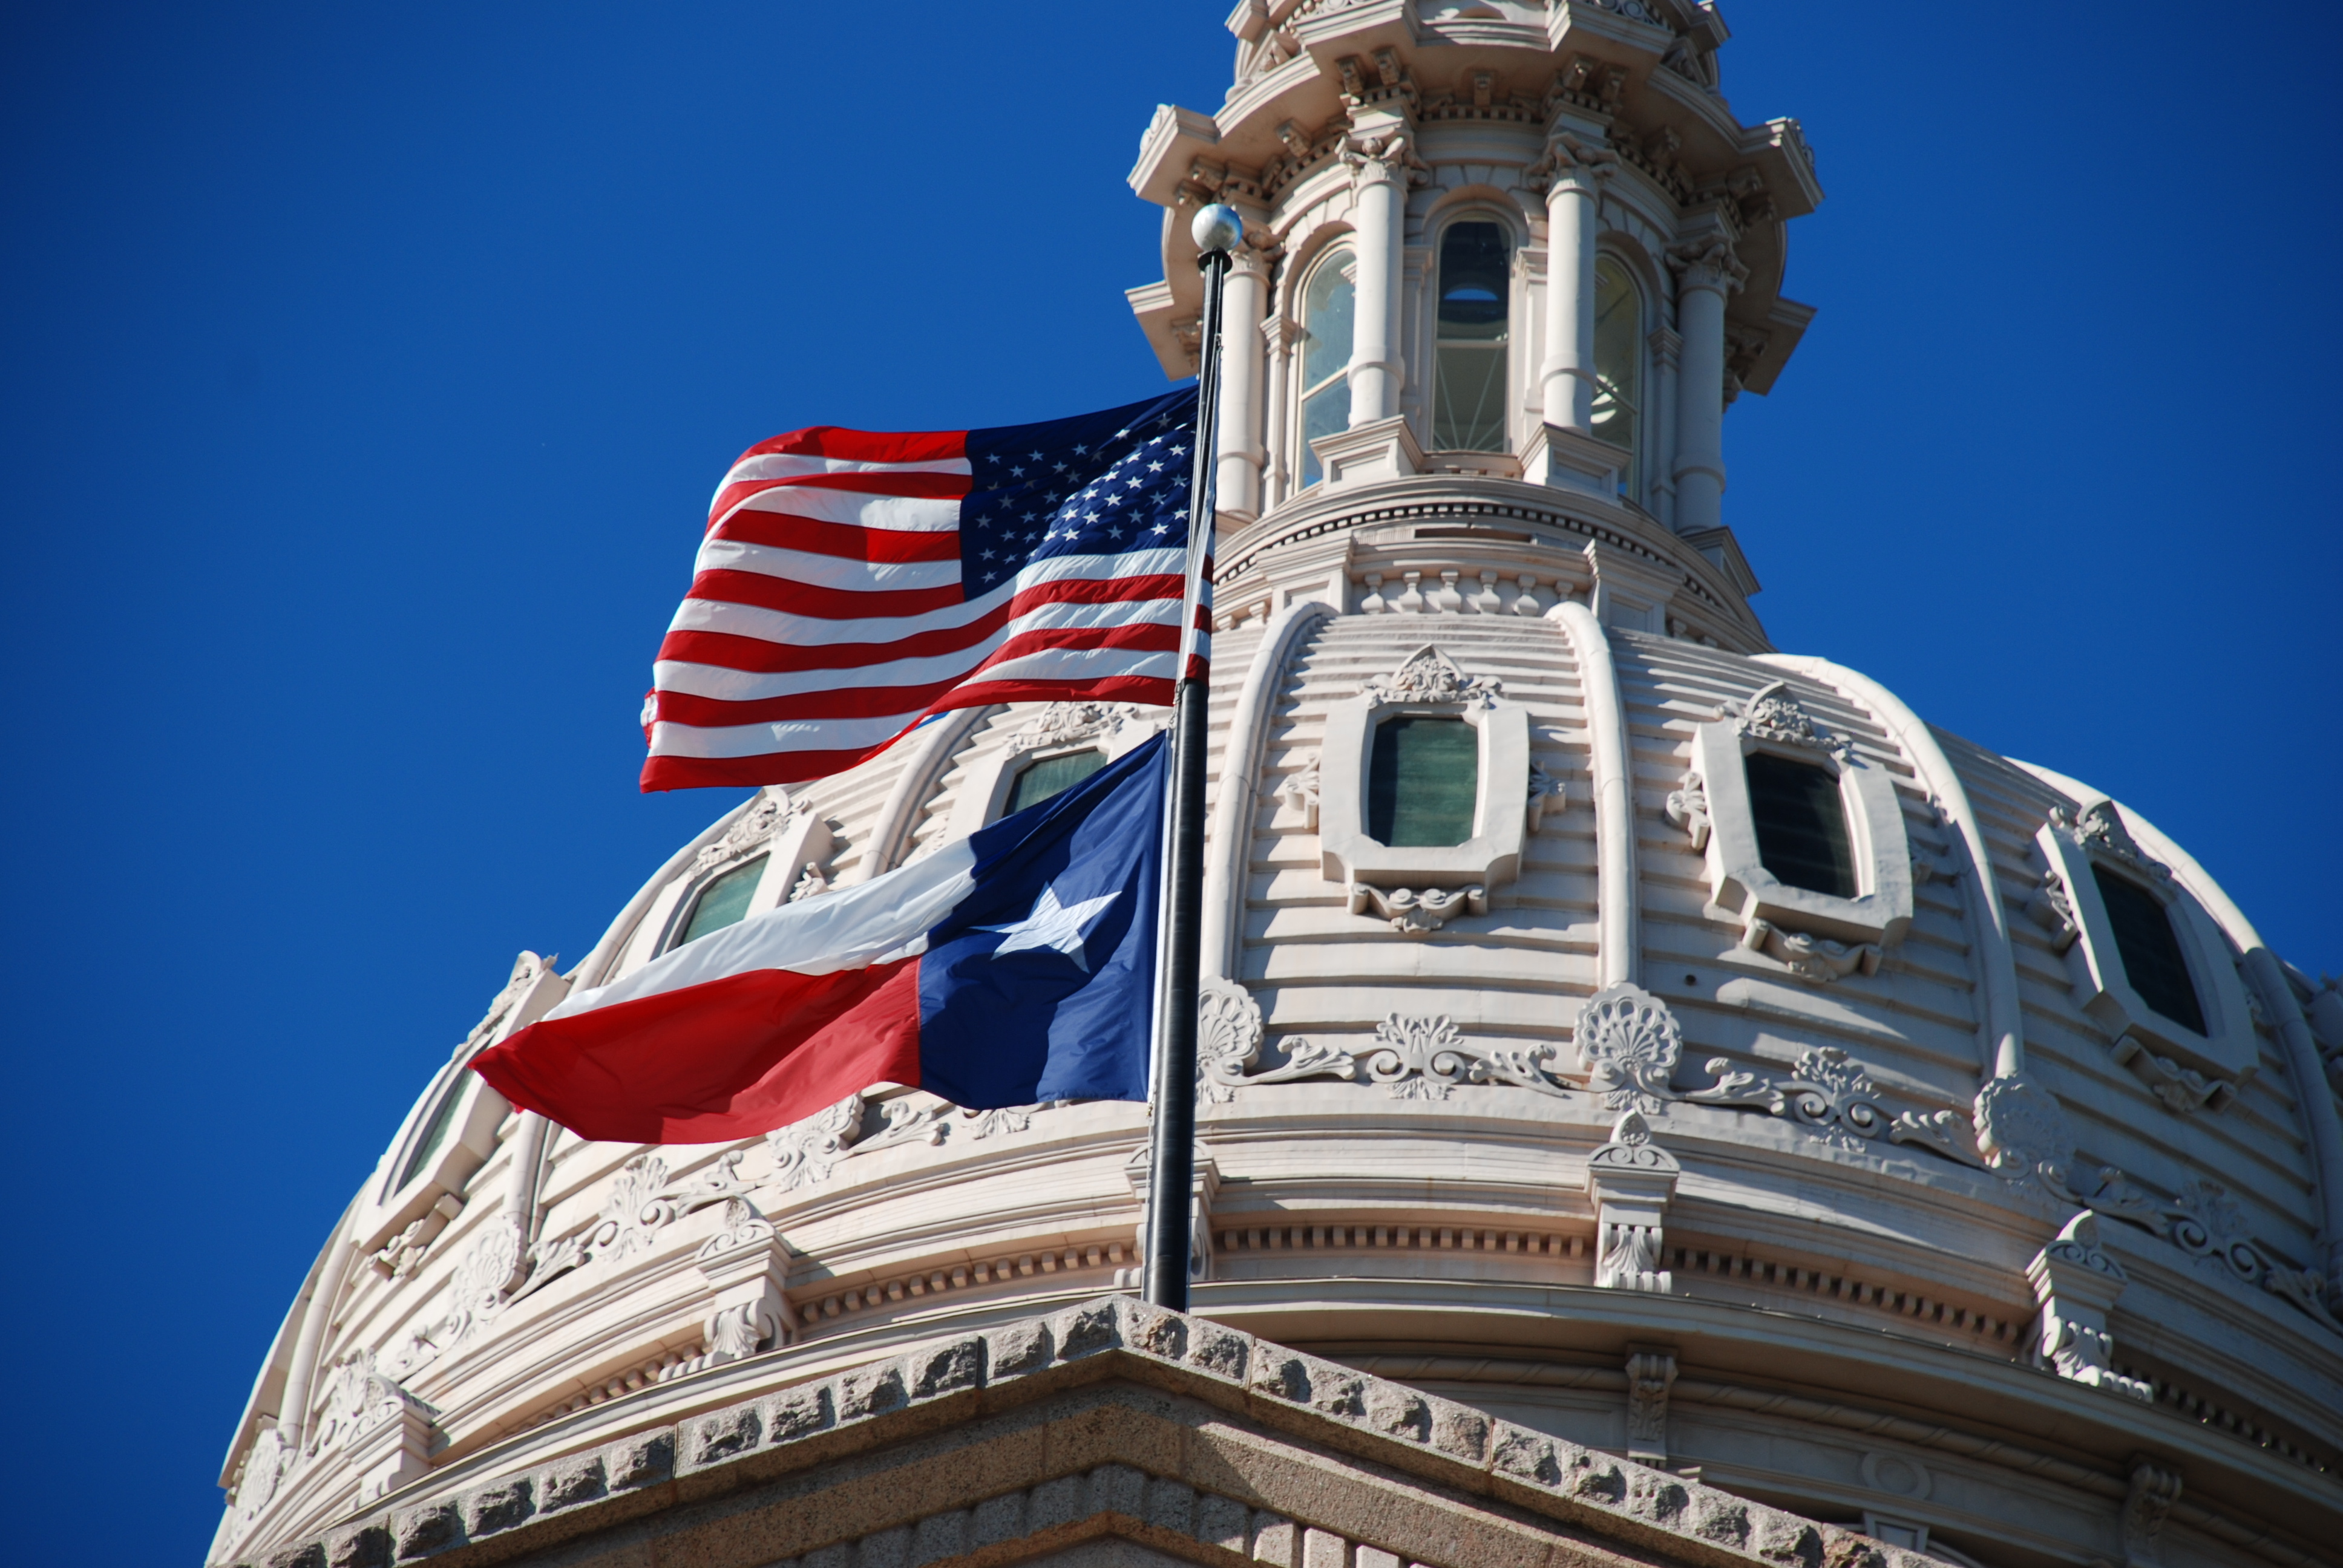 /CMSApp/TTV/media/Blog/Misc/ThinkstockPhotos-144283240-cap-Texas_flags.jpg?ext=.jpg